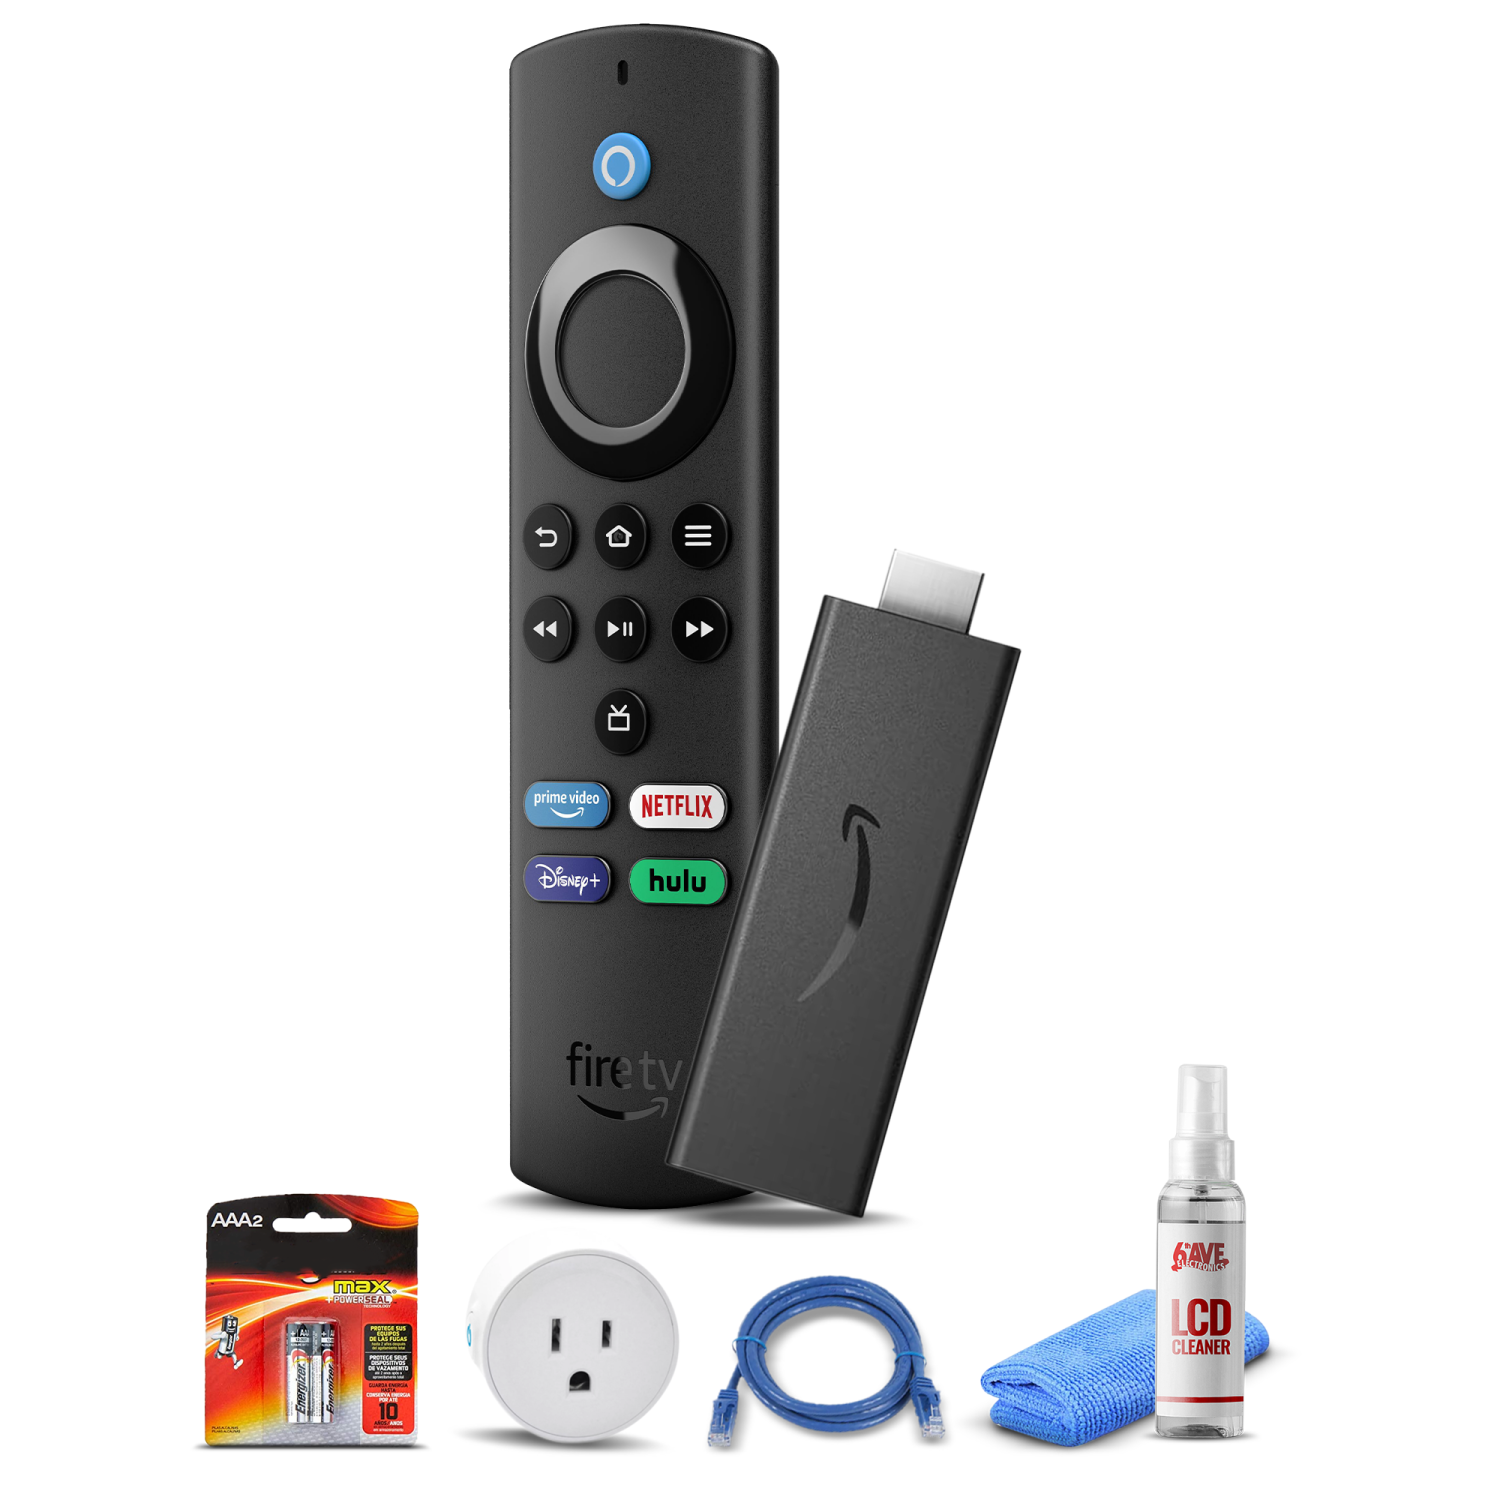 Amazon Fire TV Stick 4K Max + Smart Plug + Cat5 Cable + Batteries